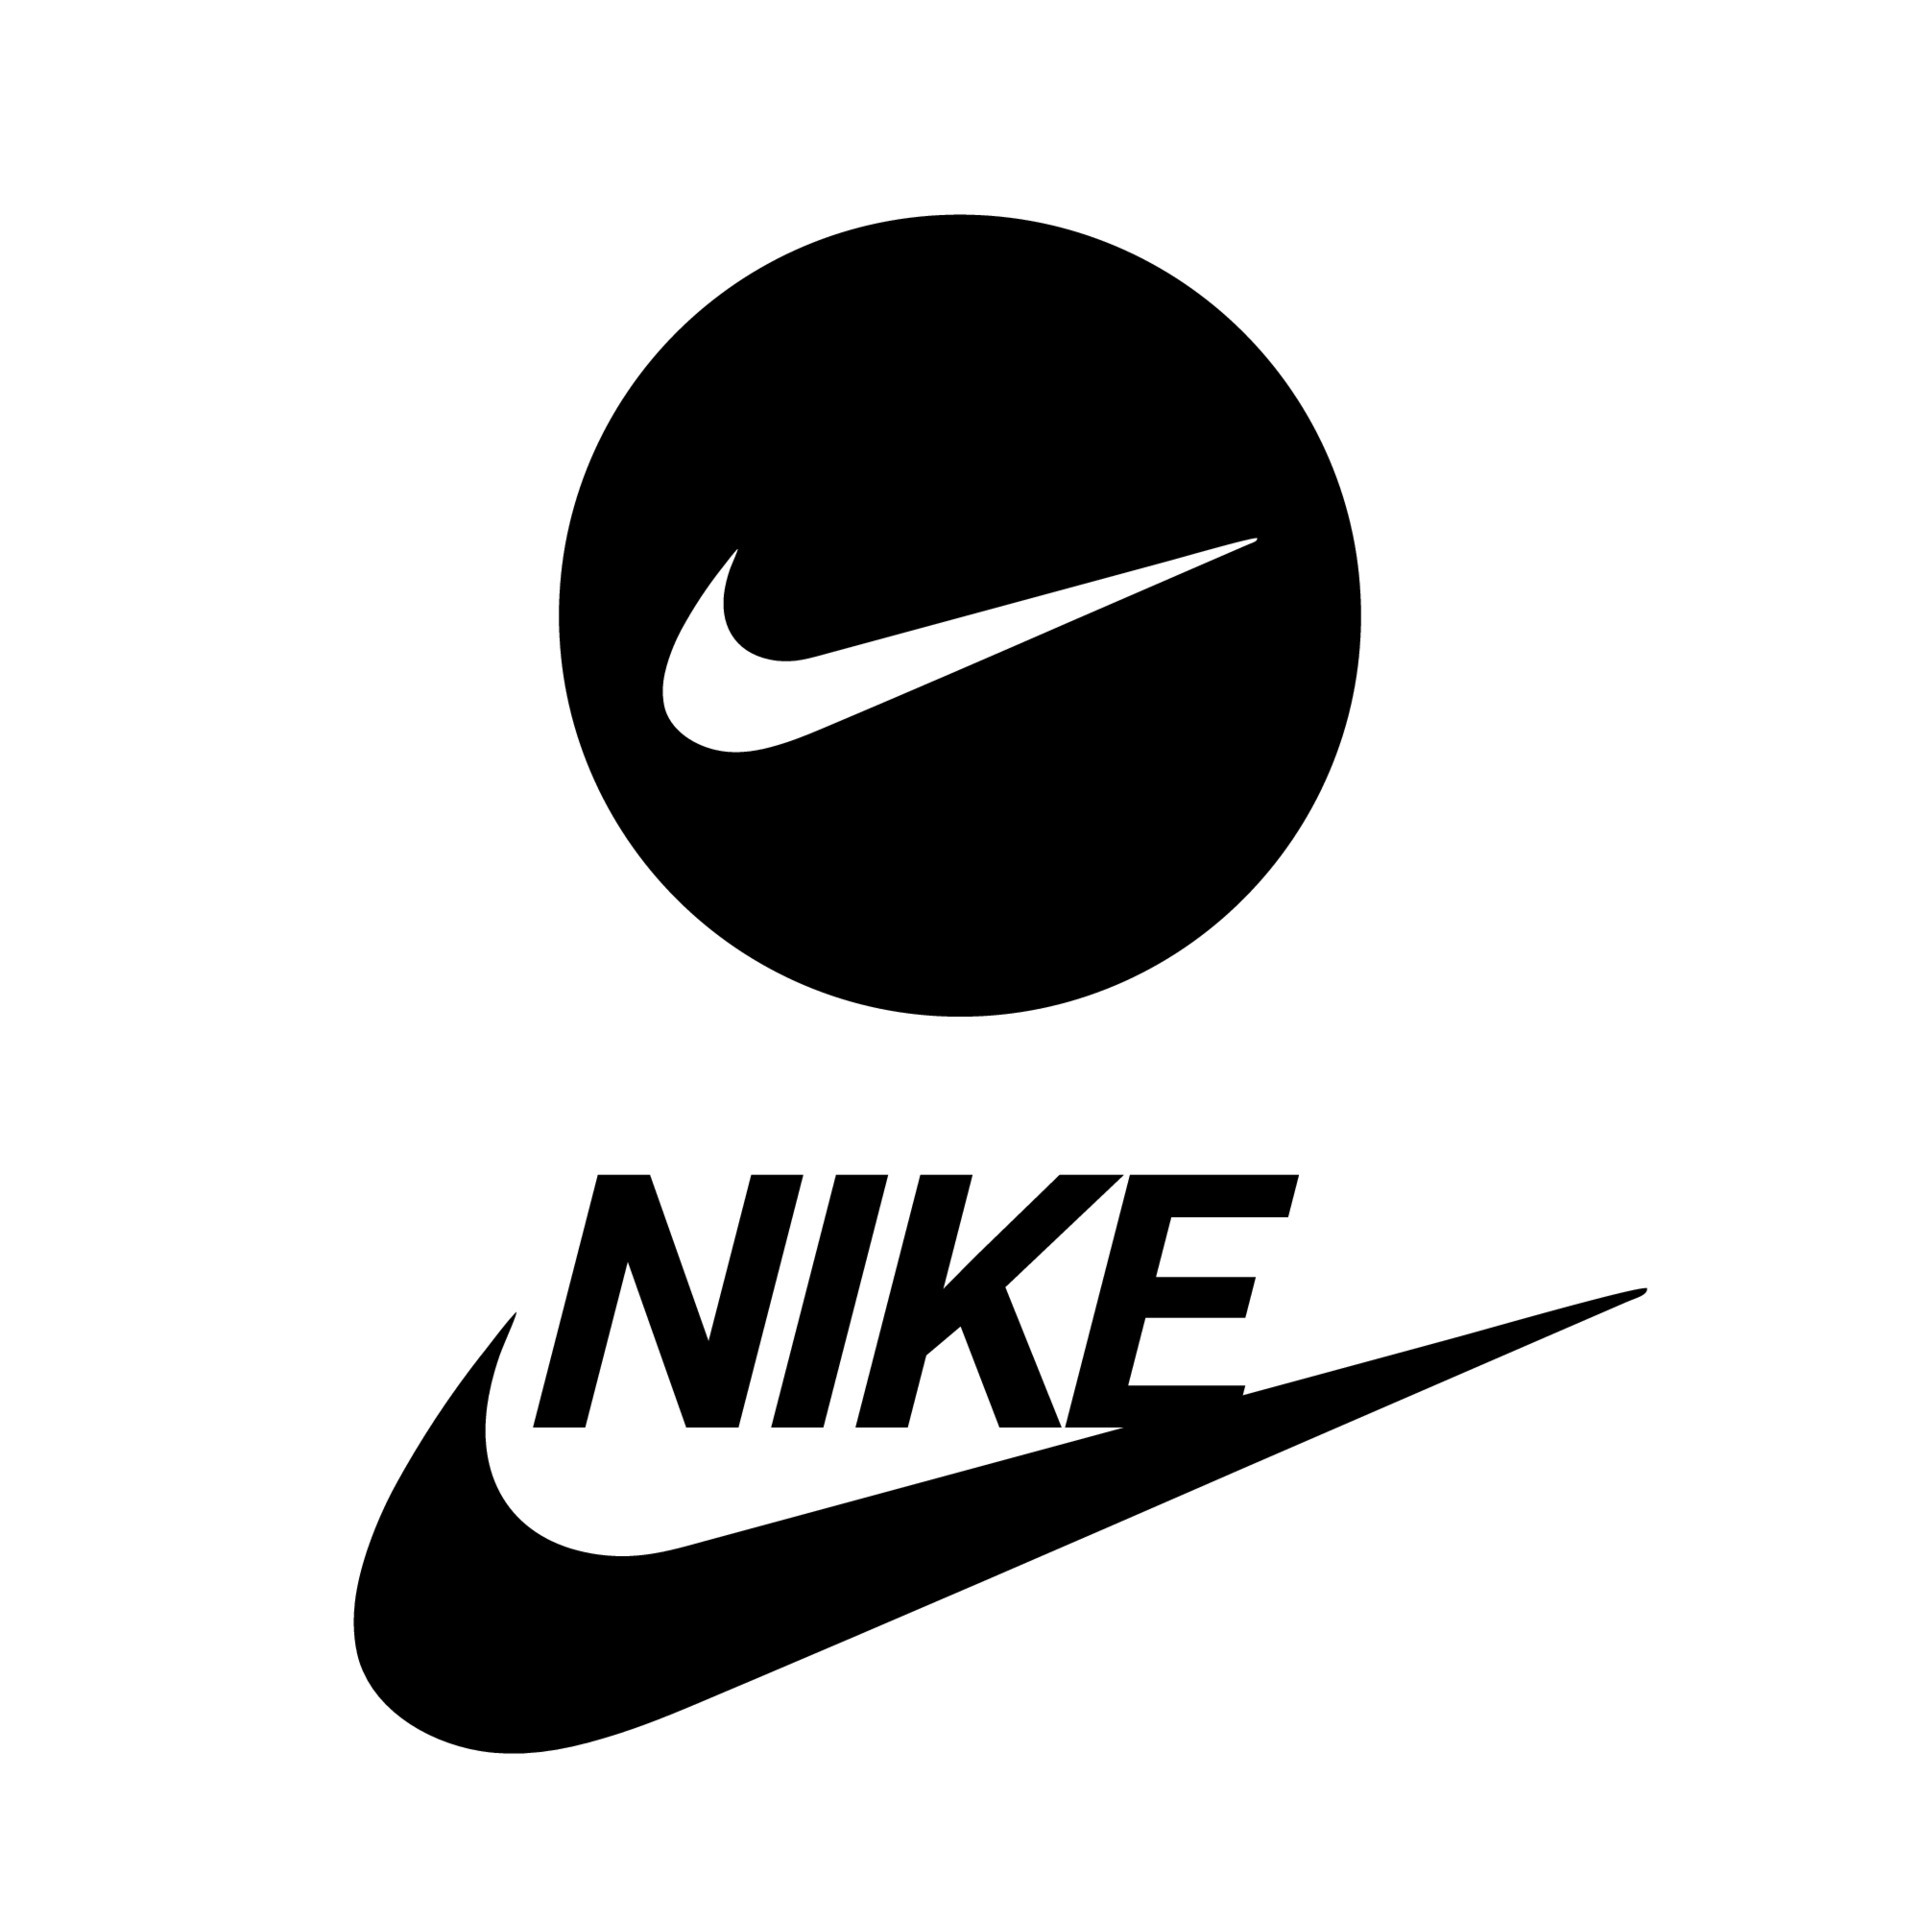 Nike logo icon vector on white background 6419207 Art at Vecteezy